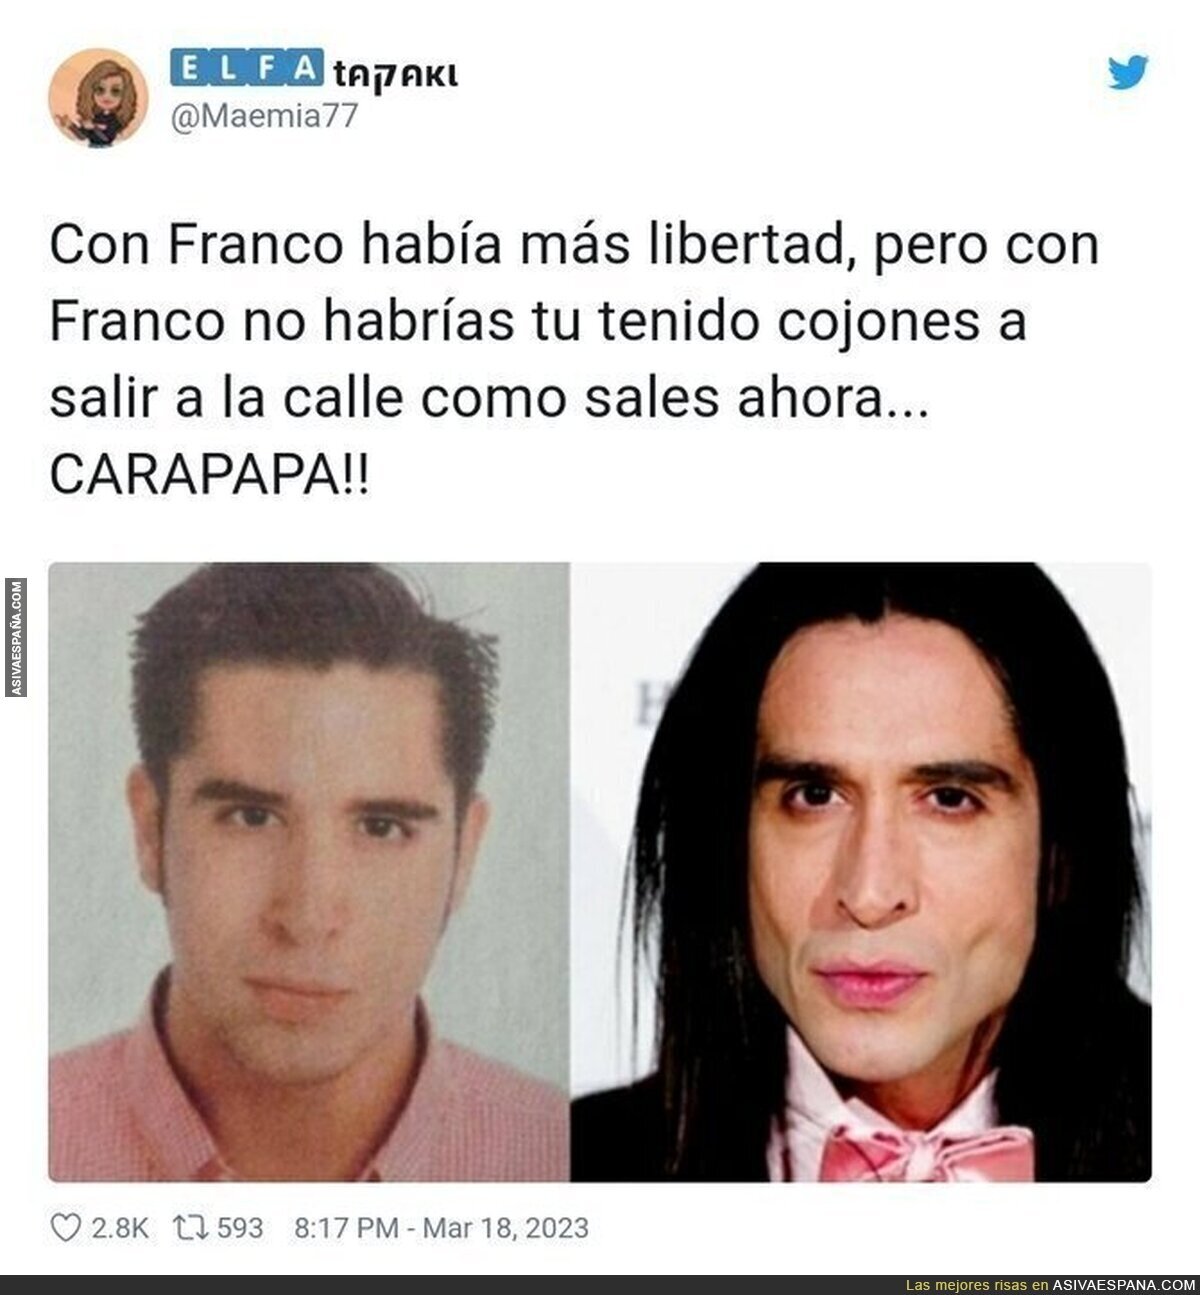 La libertad de Mario Vaquerizo